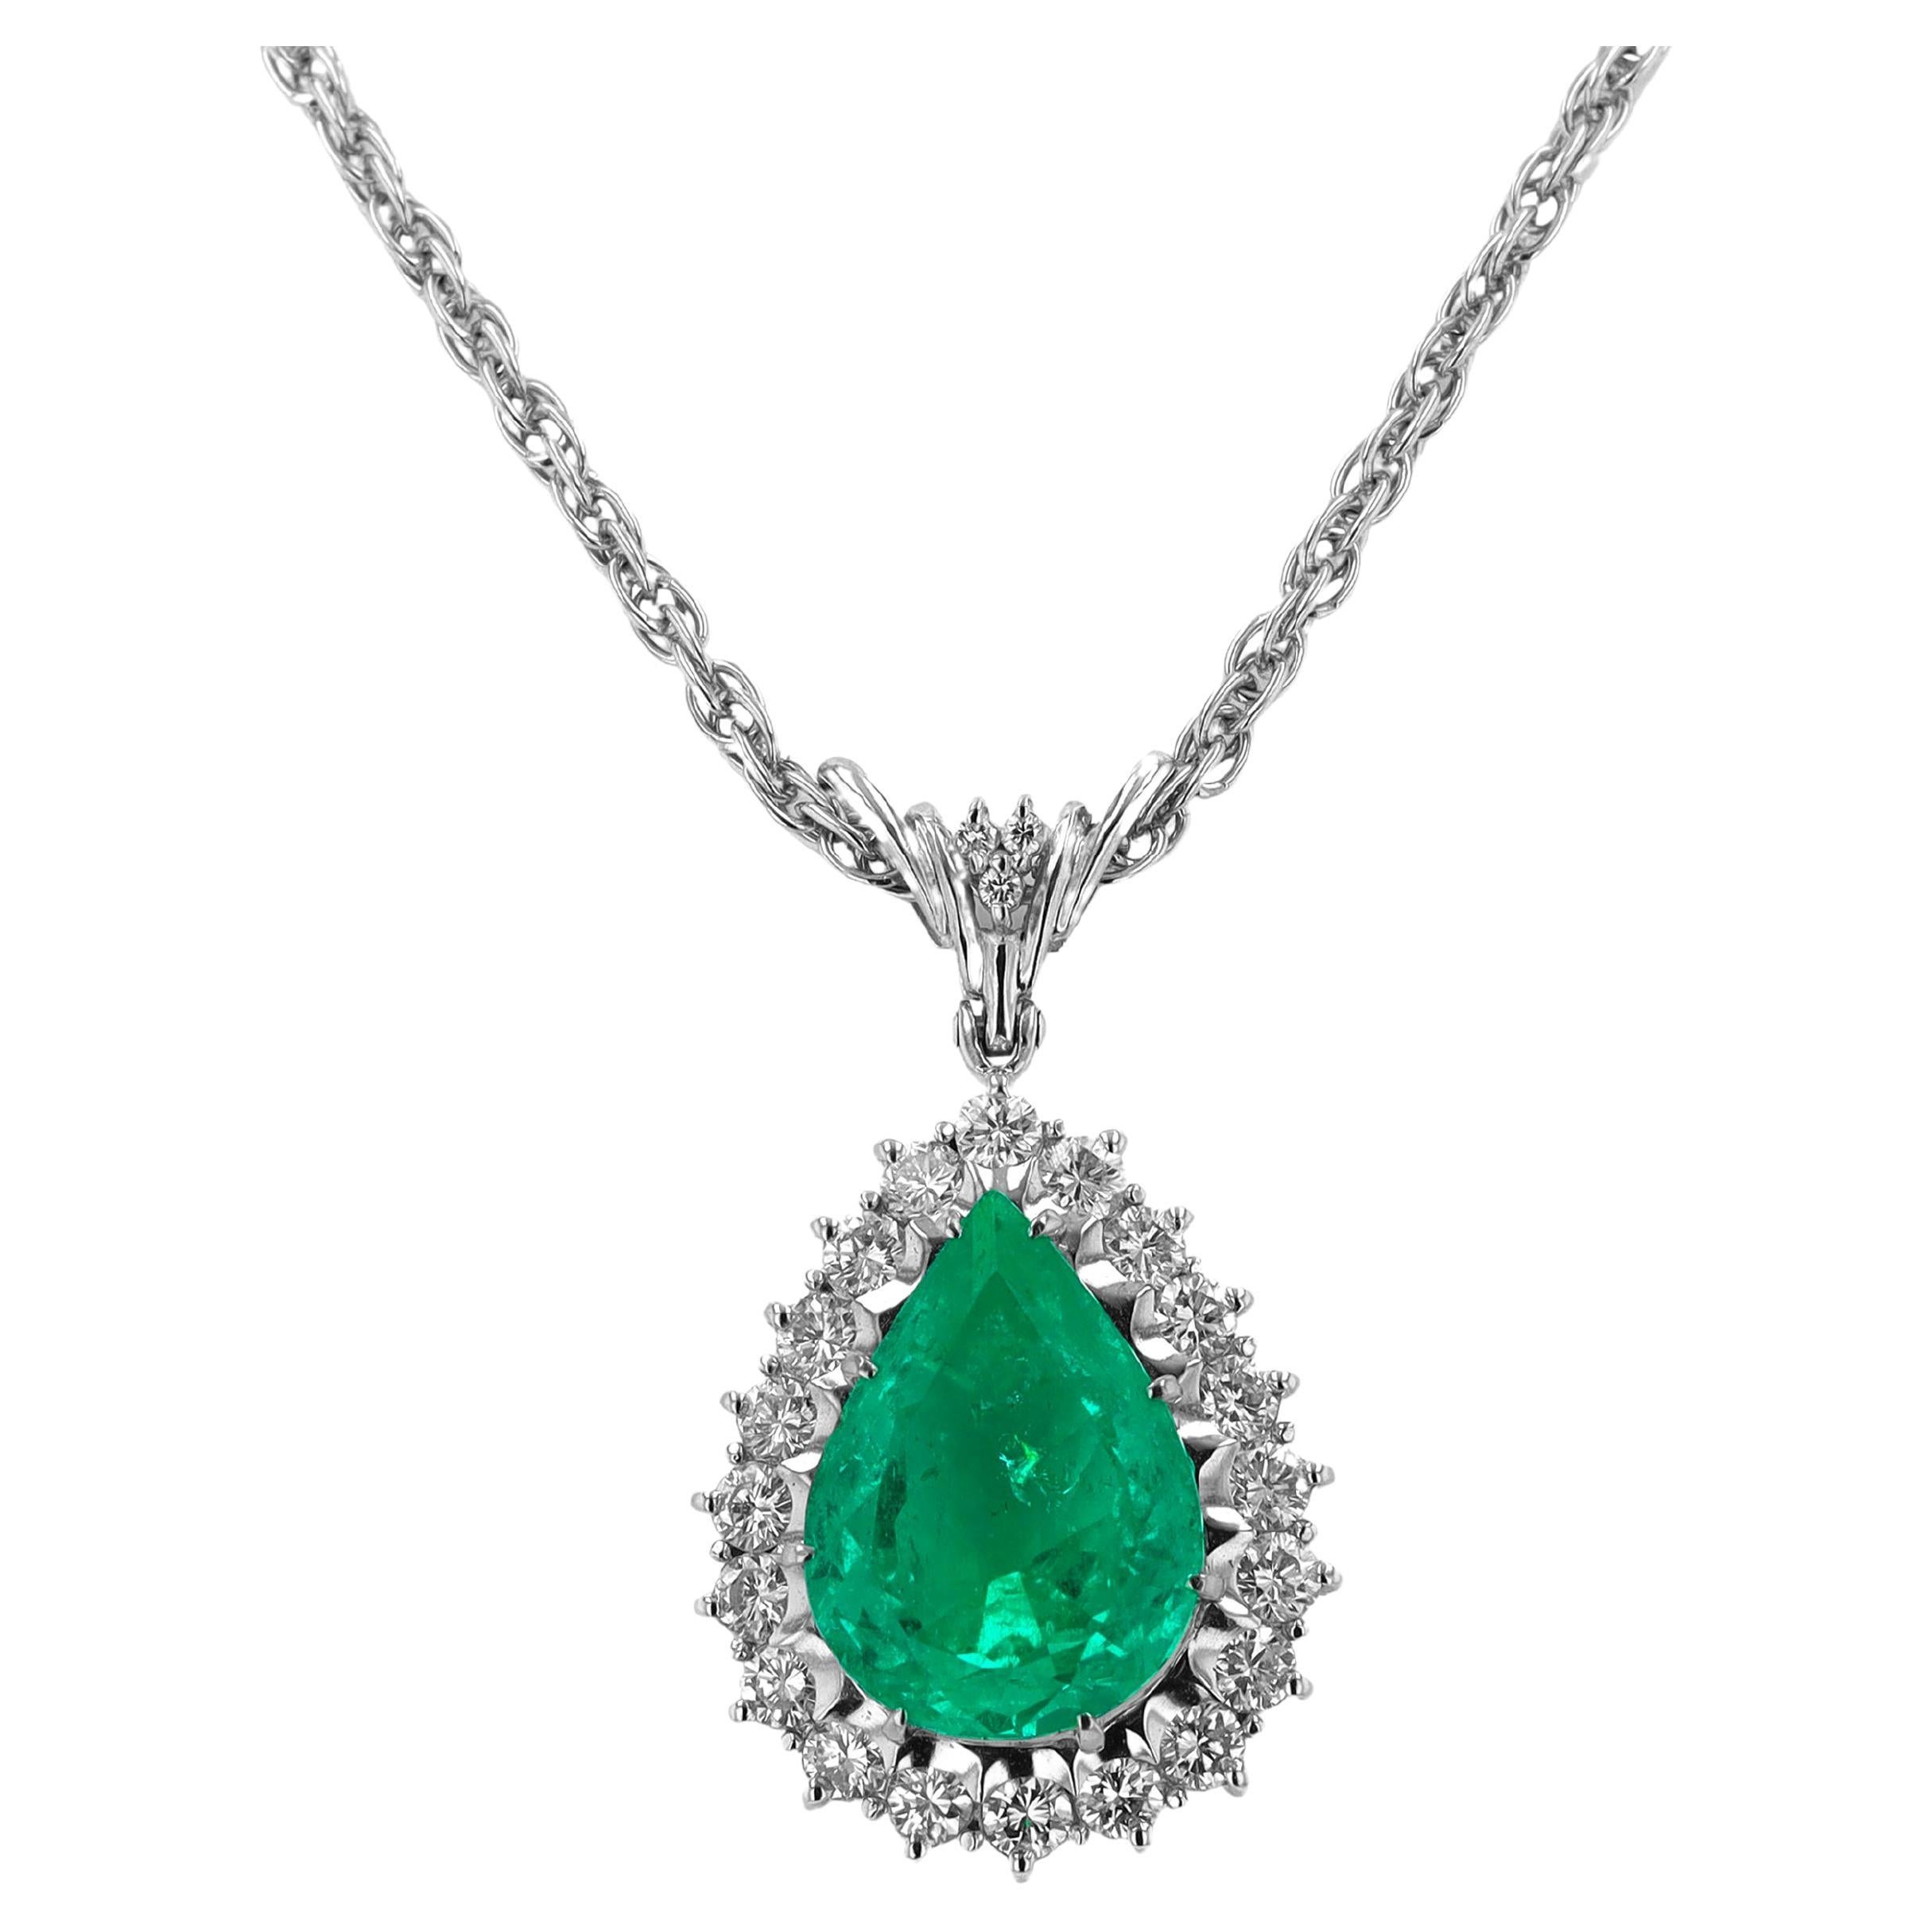 GIA-zertifizierte 10 Karat kolumbianische Smaragd-Halskette